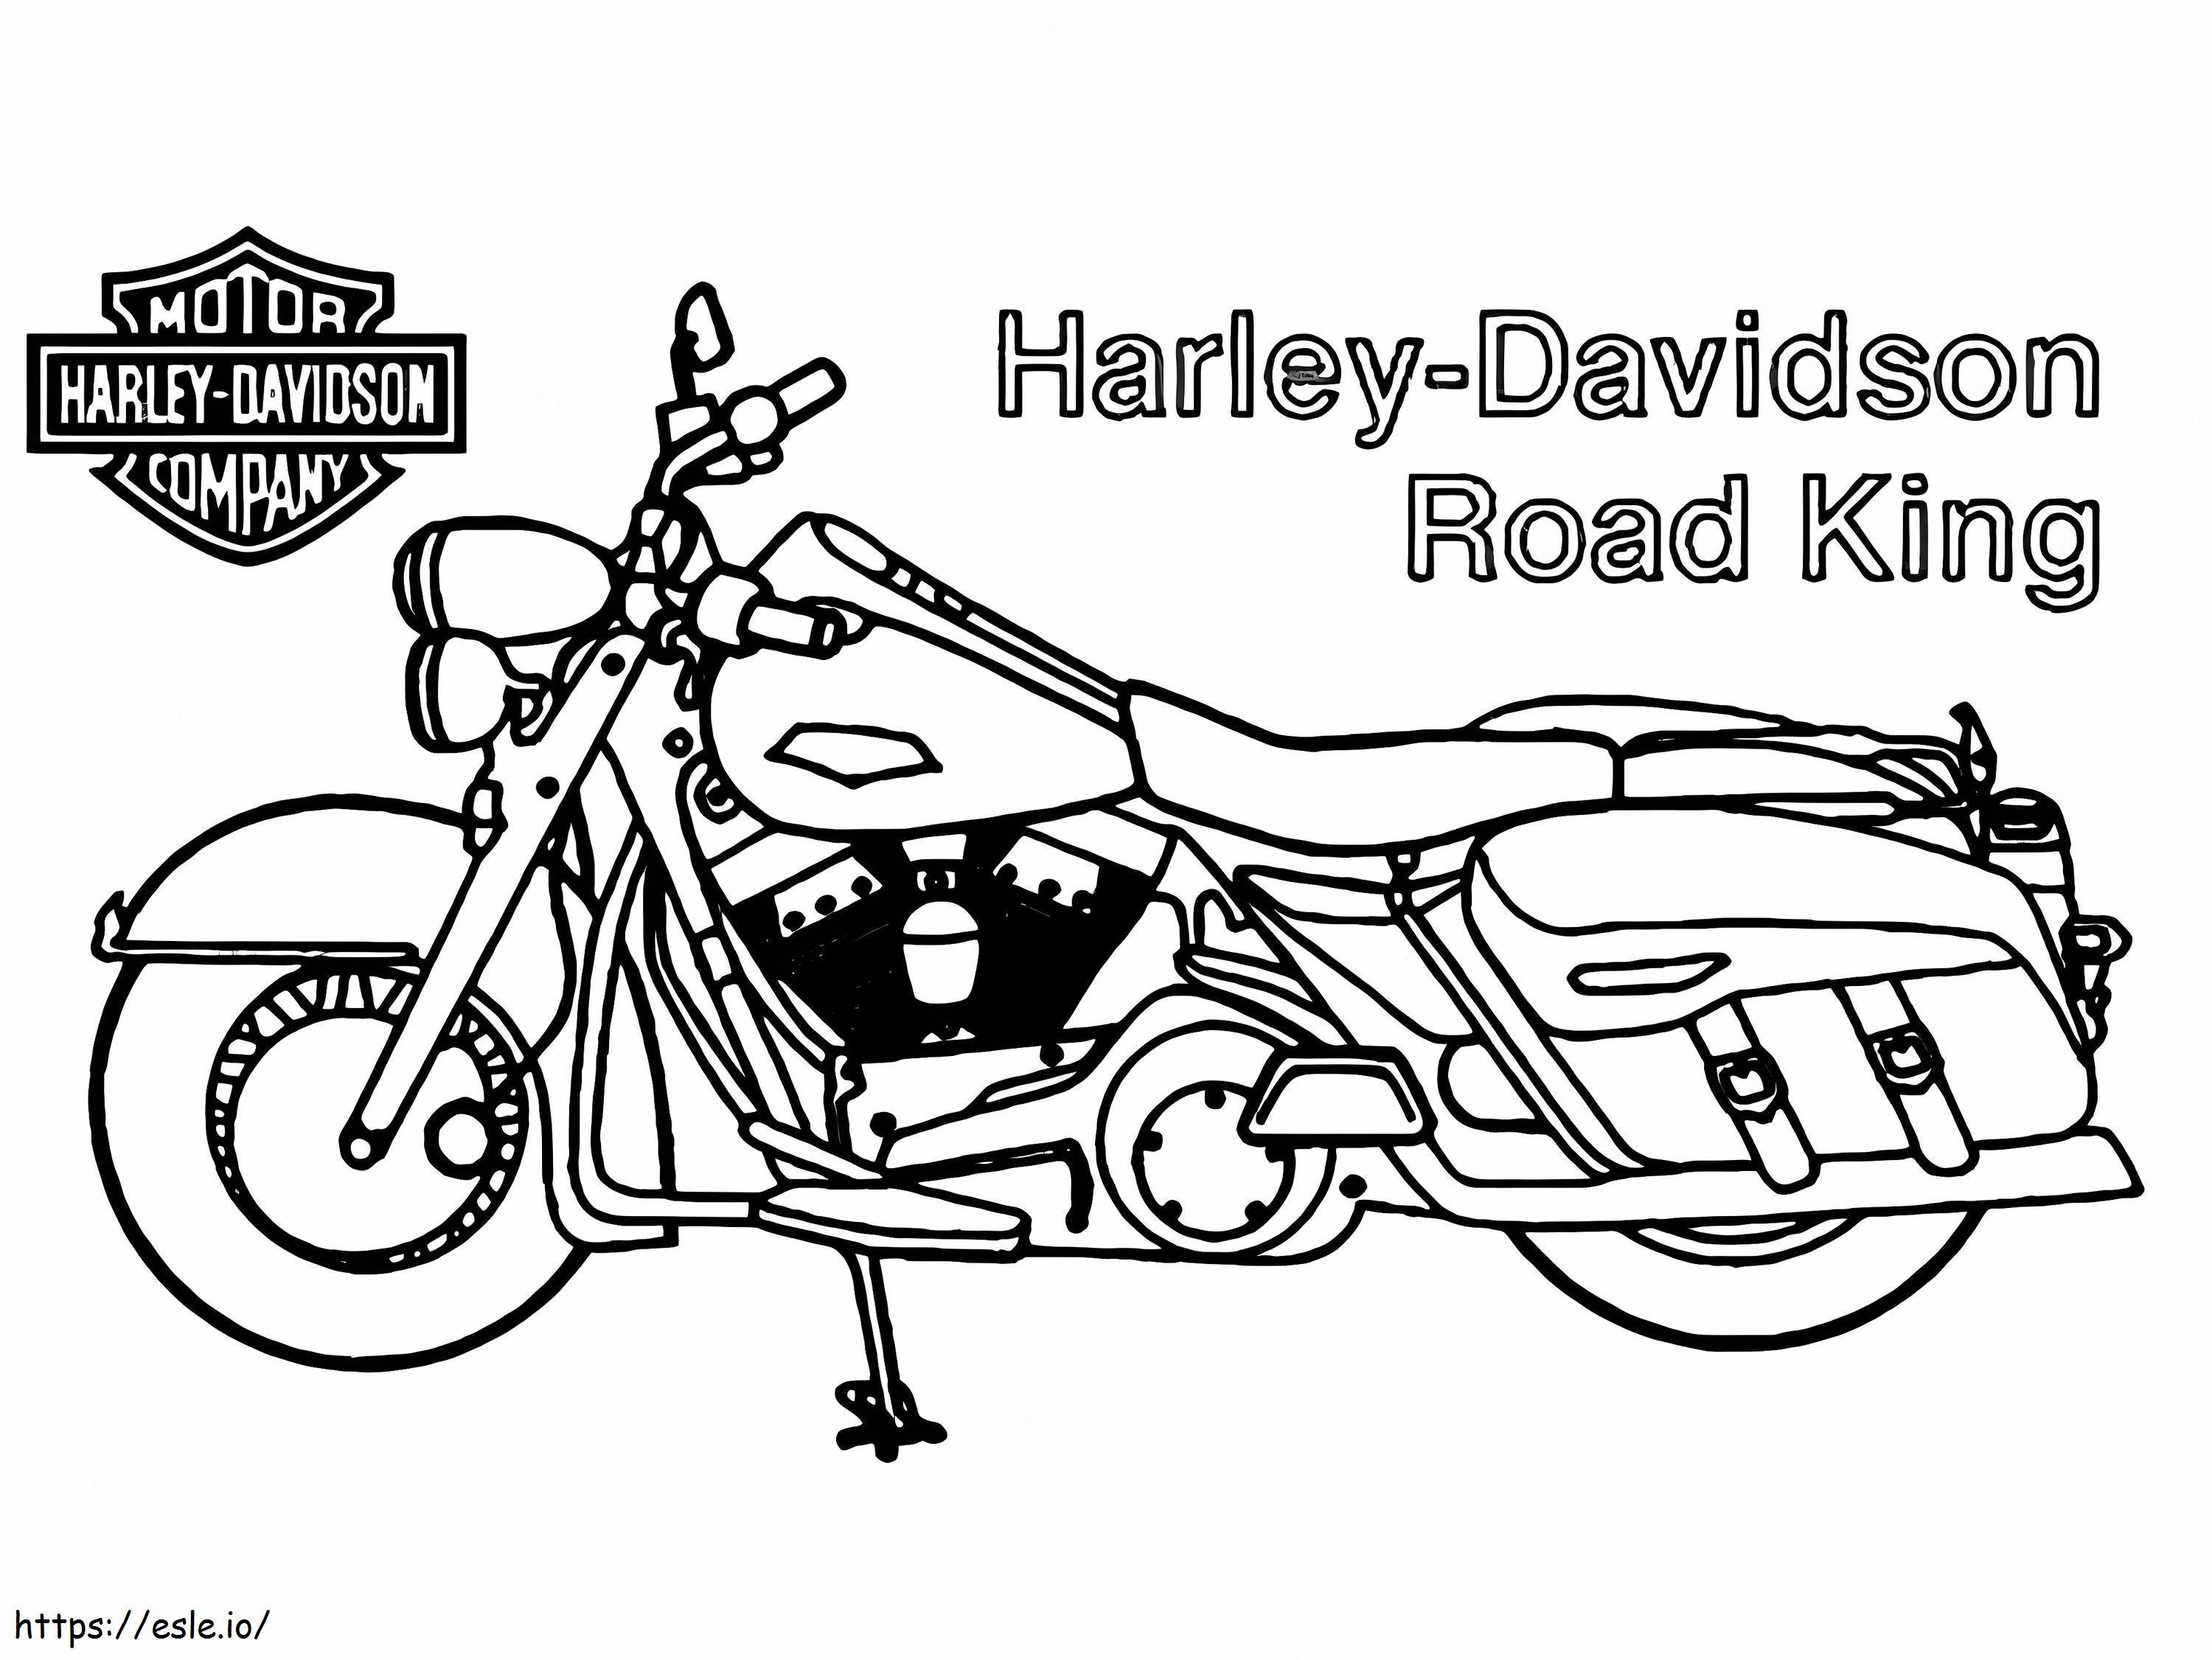 Harley Davidson Road King 1 ausmalbilder